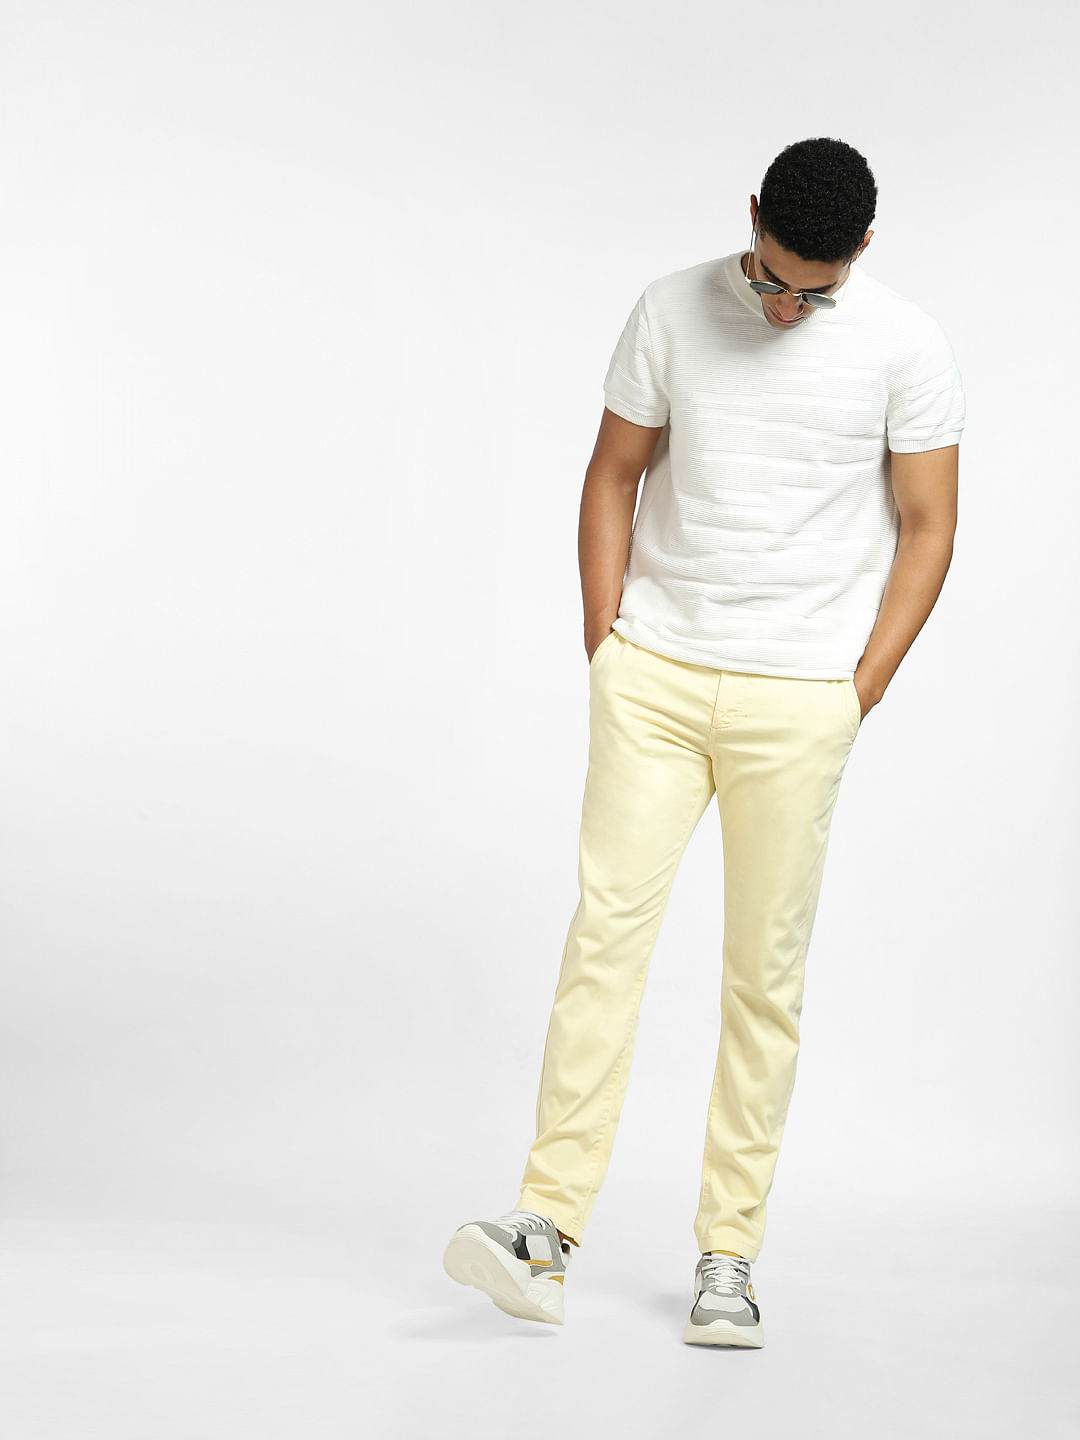 COMBRAIDED Slim Fit Men Cream Trousers  Buy COMBRAIDED Slim Fit Men Cream  Trousers Online at Best Prices in India  Flipkartcom